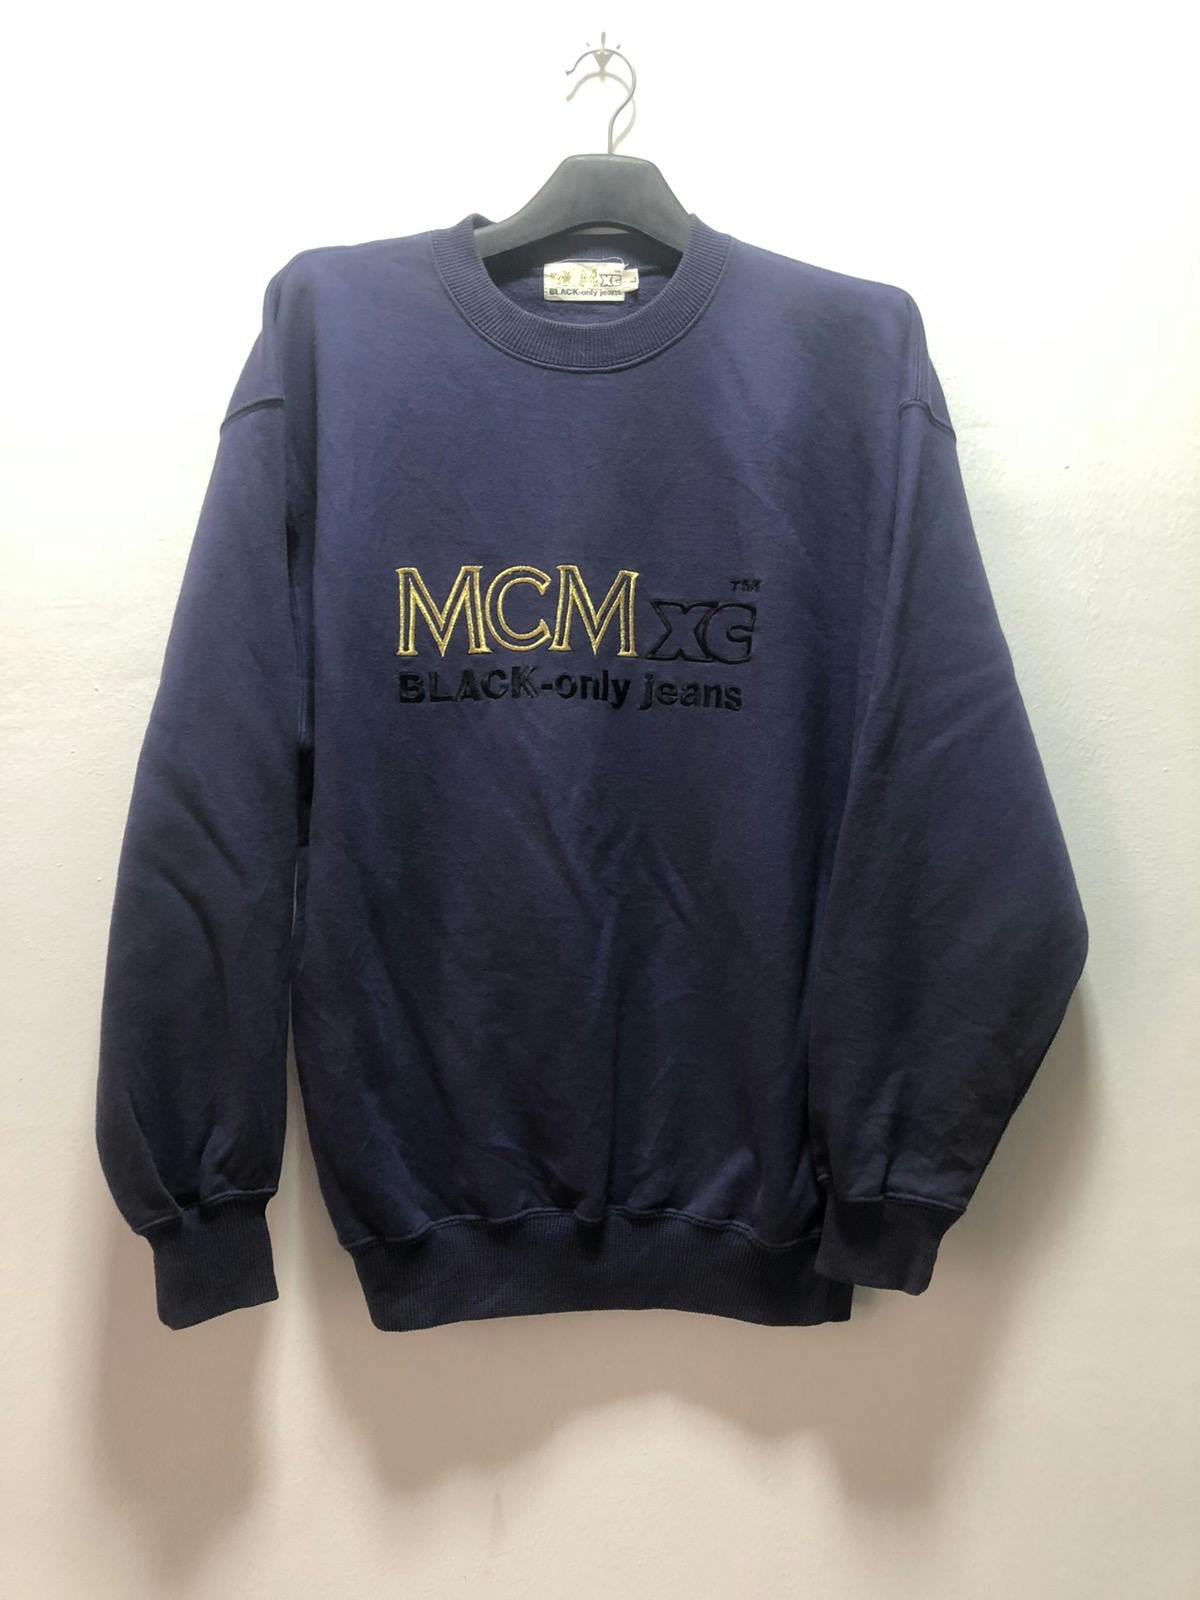 Vintage MCM xc Sweatshirt Gold Logo Black only Jeans - 1